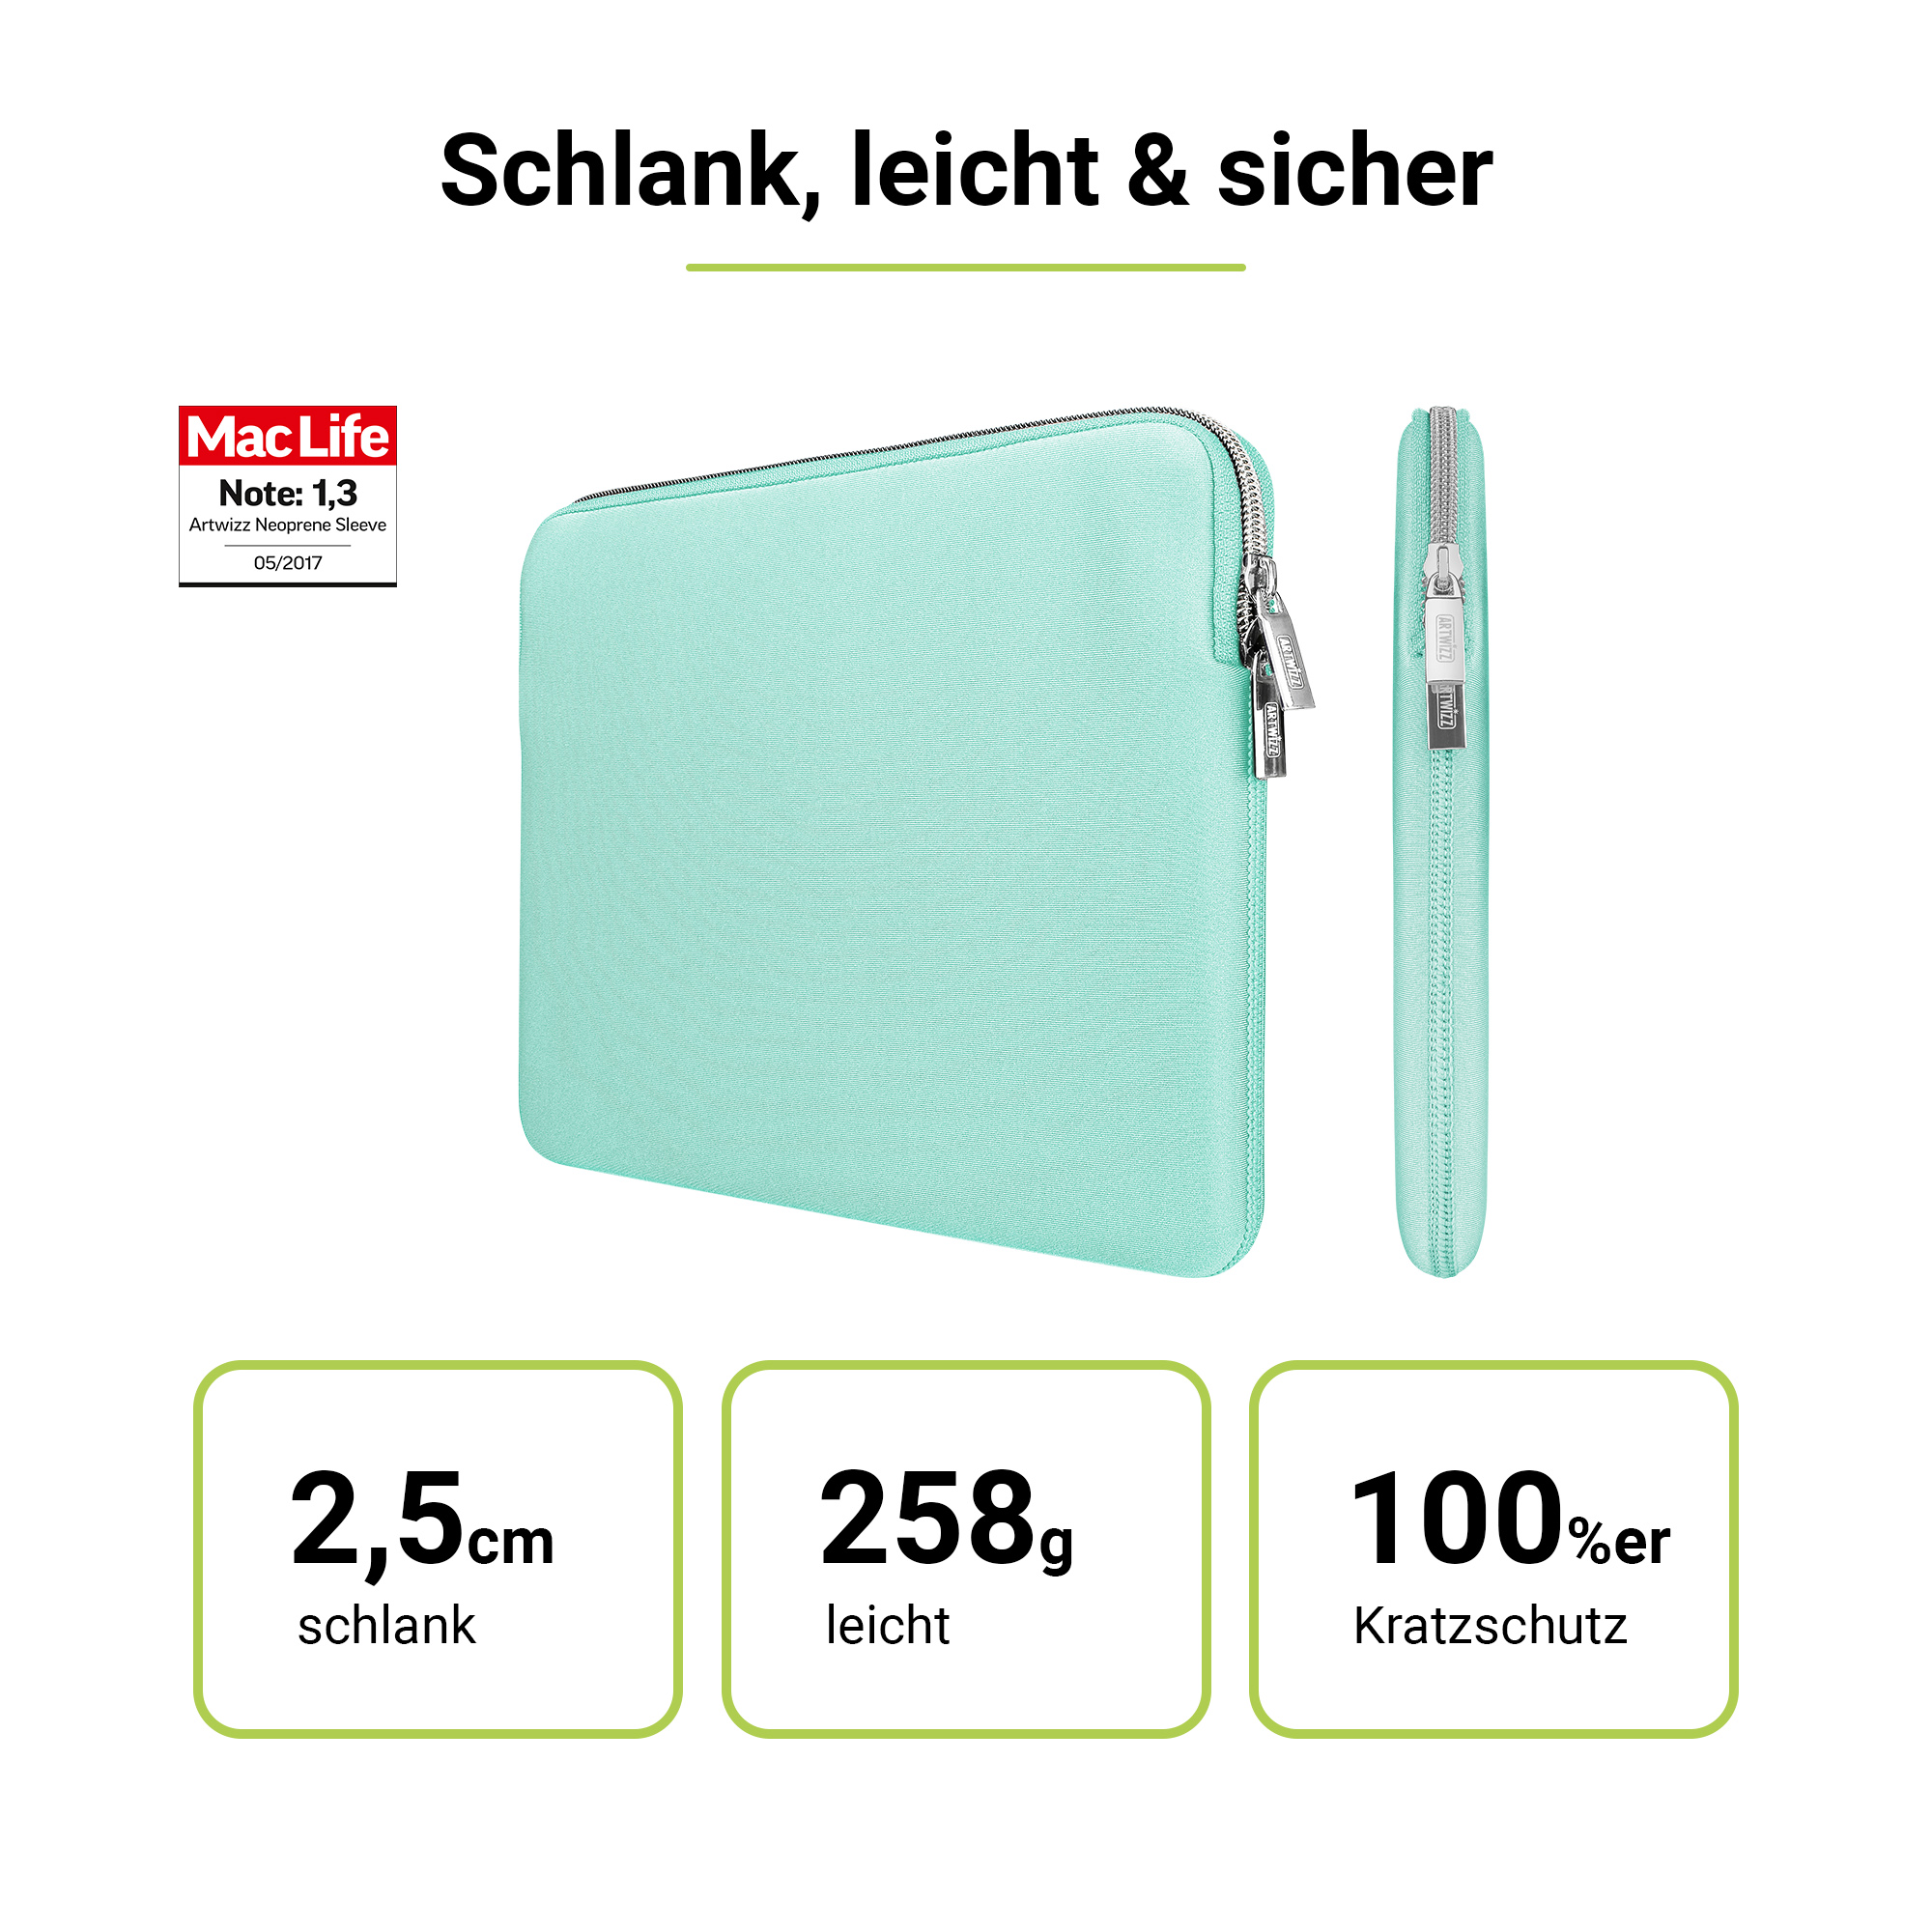 ARTWIZZ Neopren, Sleeve Sleeve Grün Apple Notebook für Tasche Neoprene